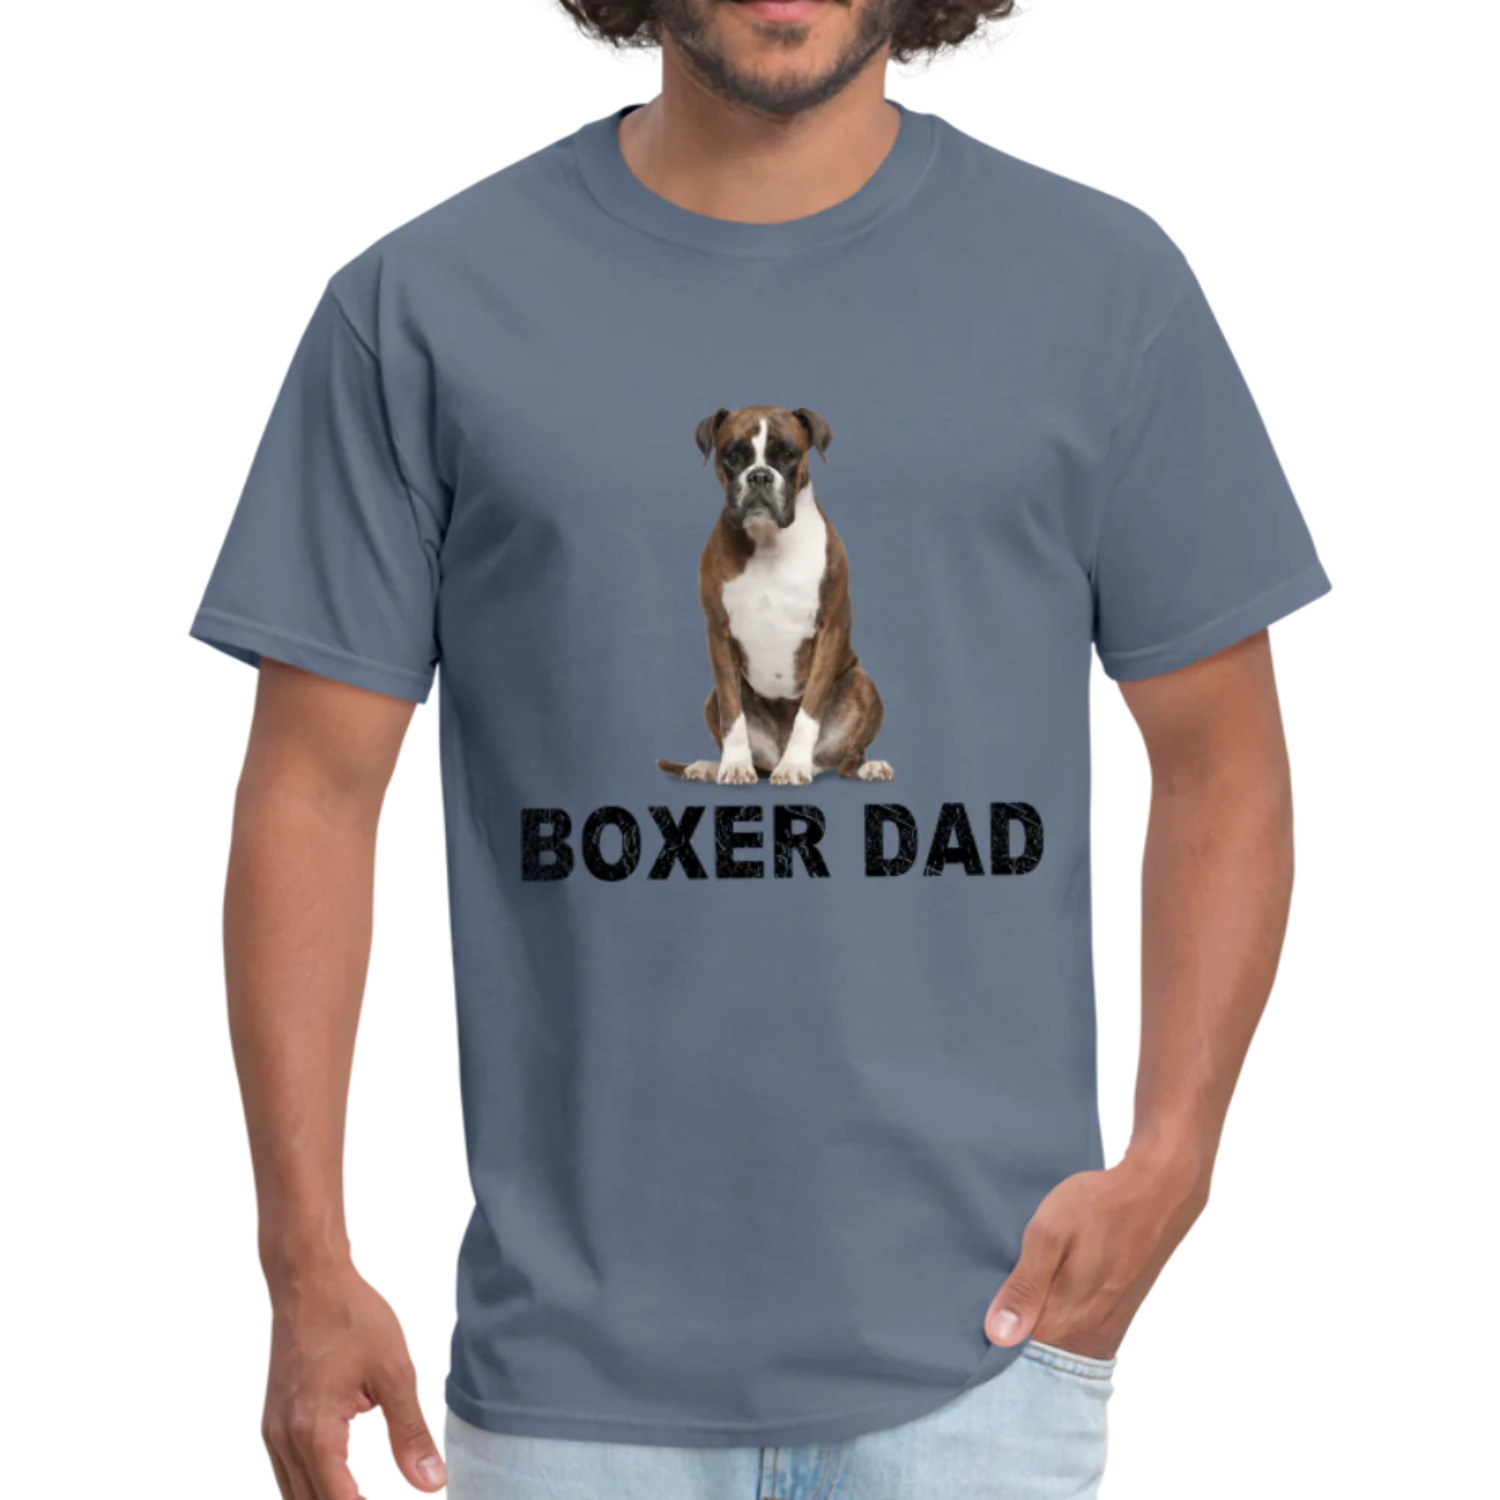 Boxer Dad Shirt, Dog Dad TShirt, Gift For Dog Lover, Dog Tshirt, Gift for Boxer Dad, Dog Papa Tee, Dog Dad Gift, Boxer Lover Shirt - image 5 of 11